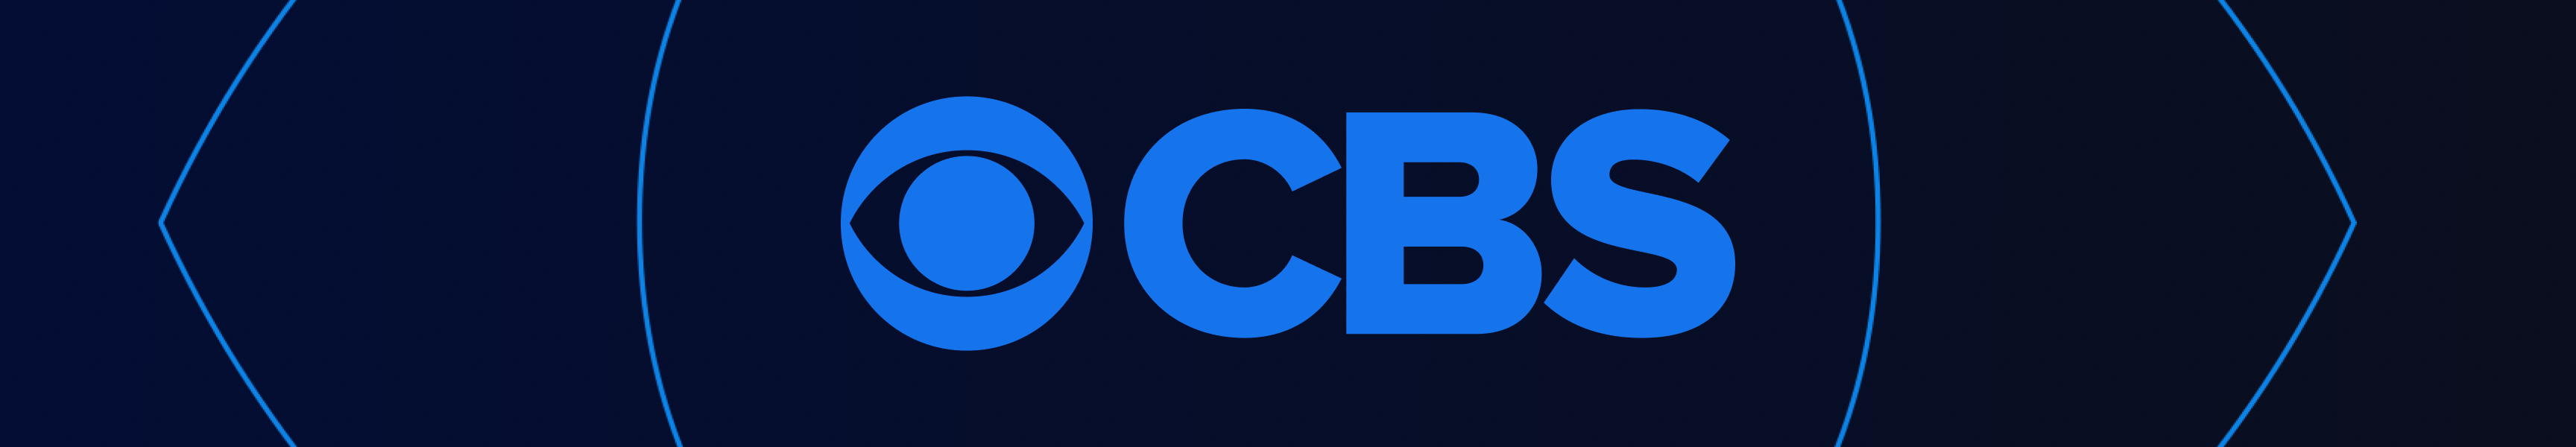 CBS Entertainment Accessories